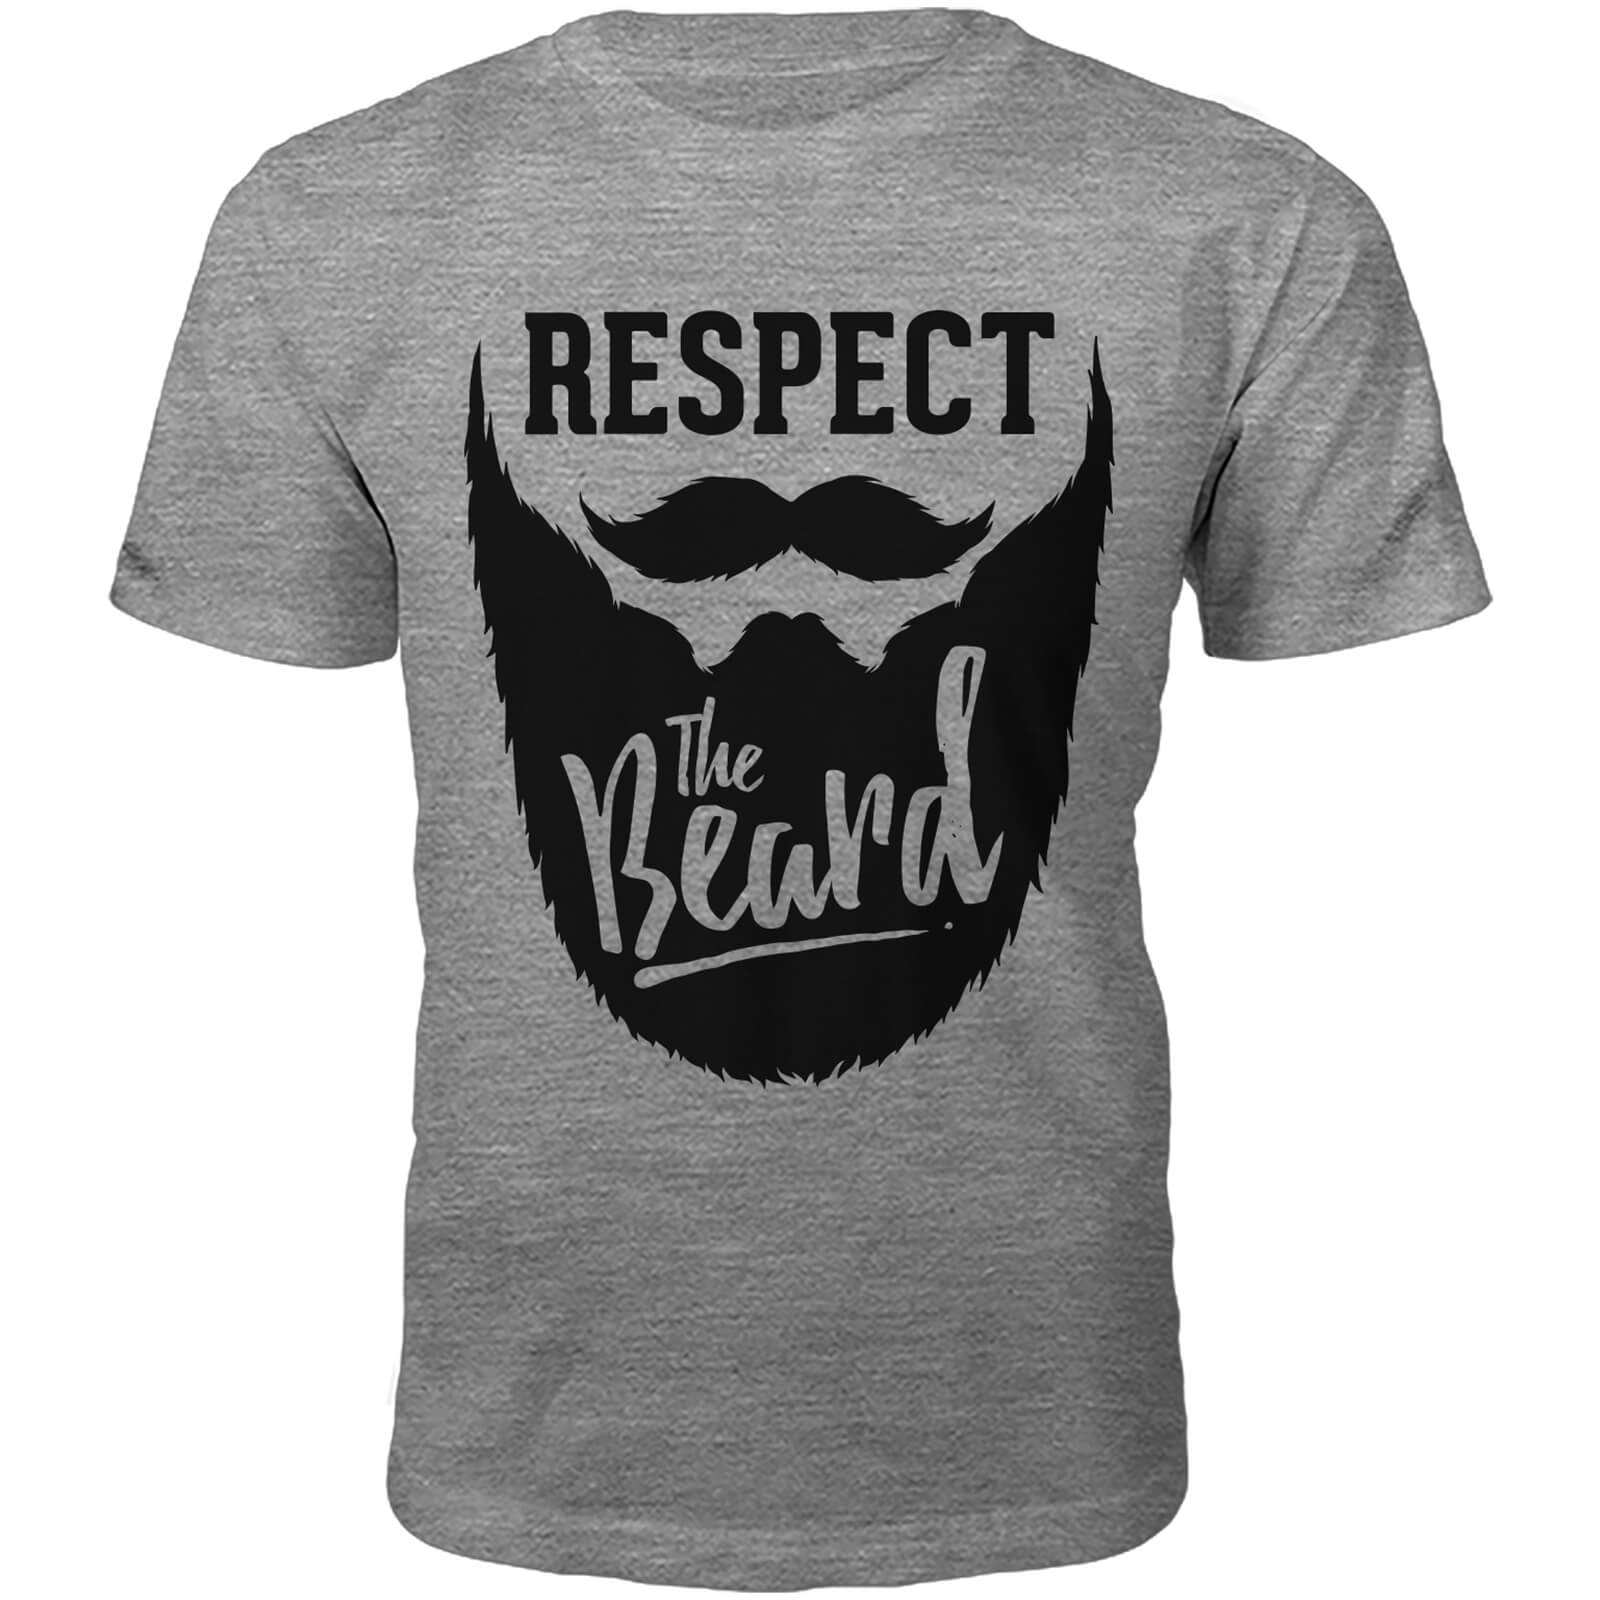 Respect The Beard Slogan T-Shirt - Grey - S - Grey